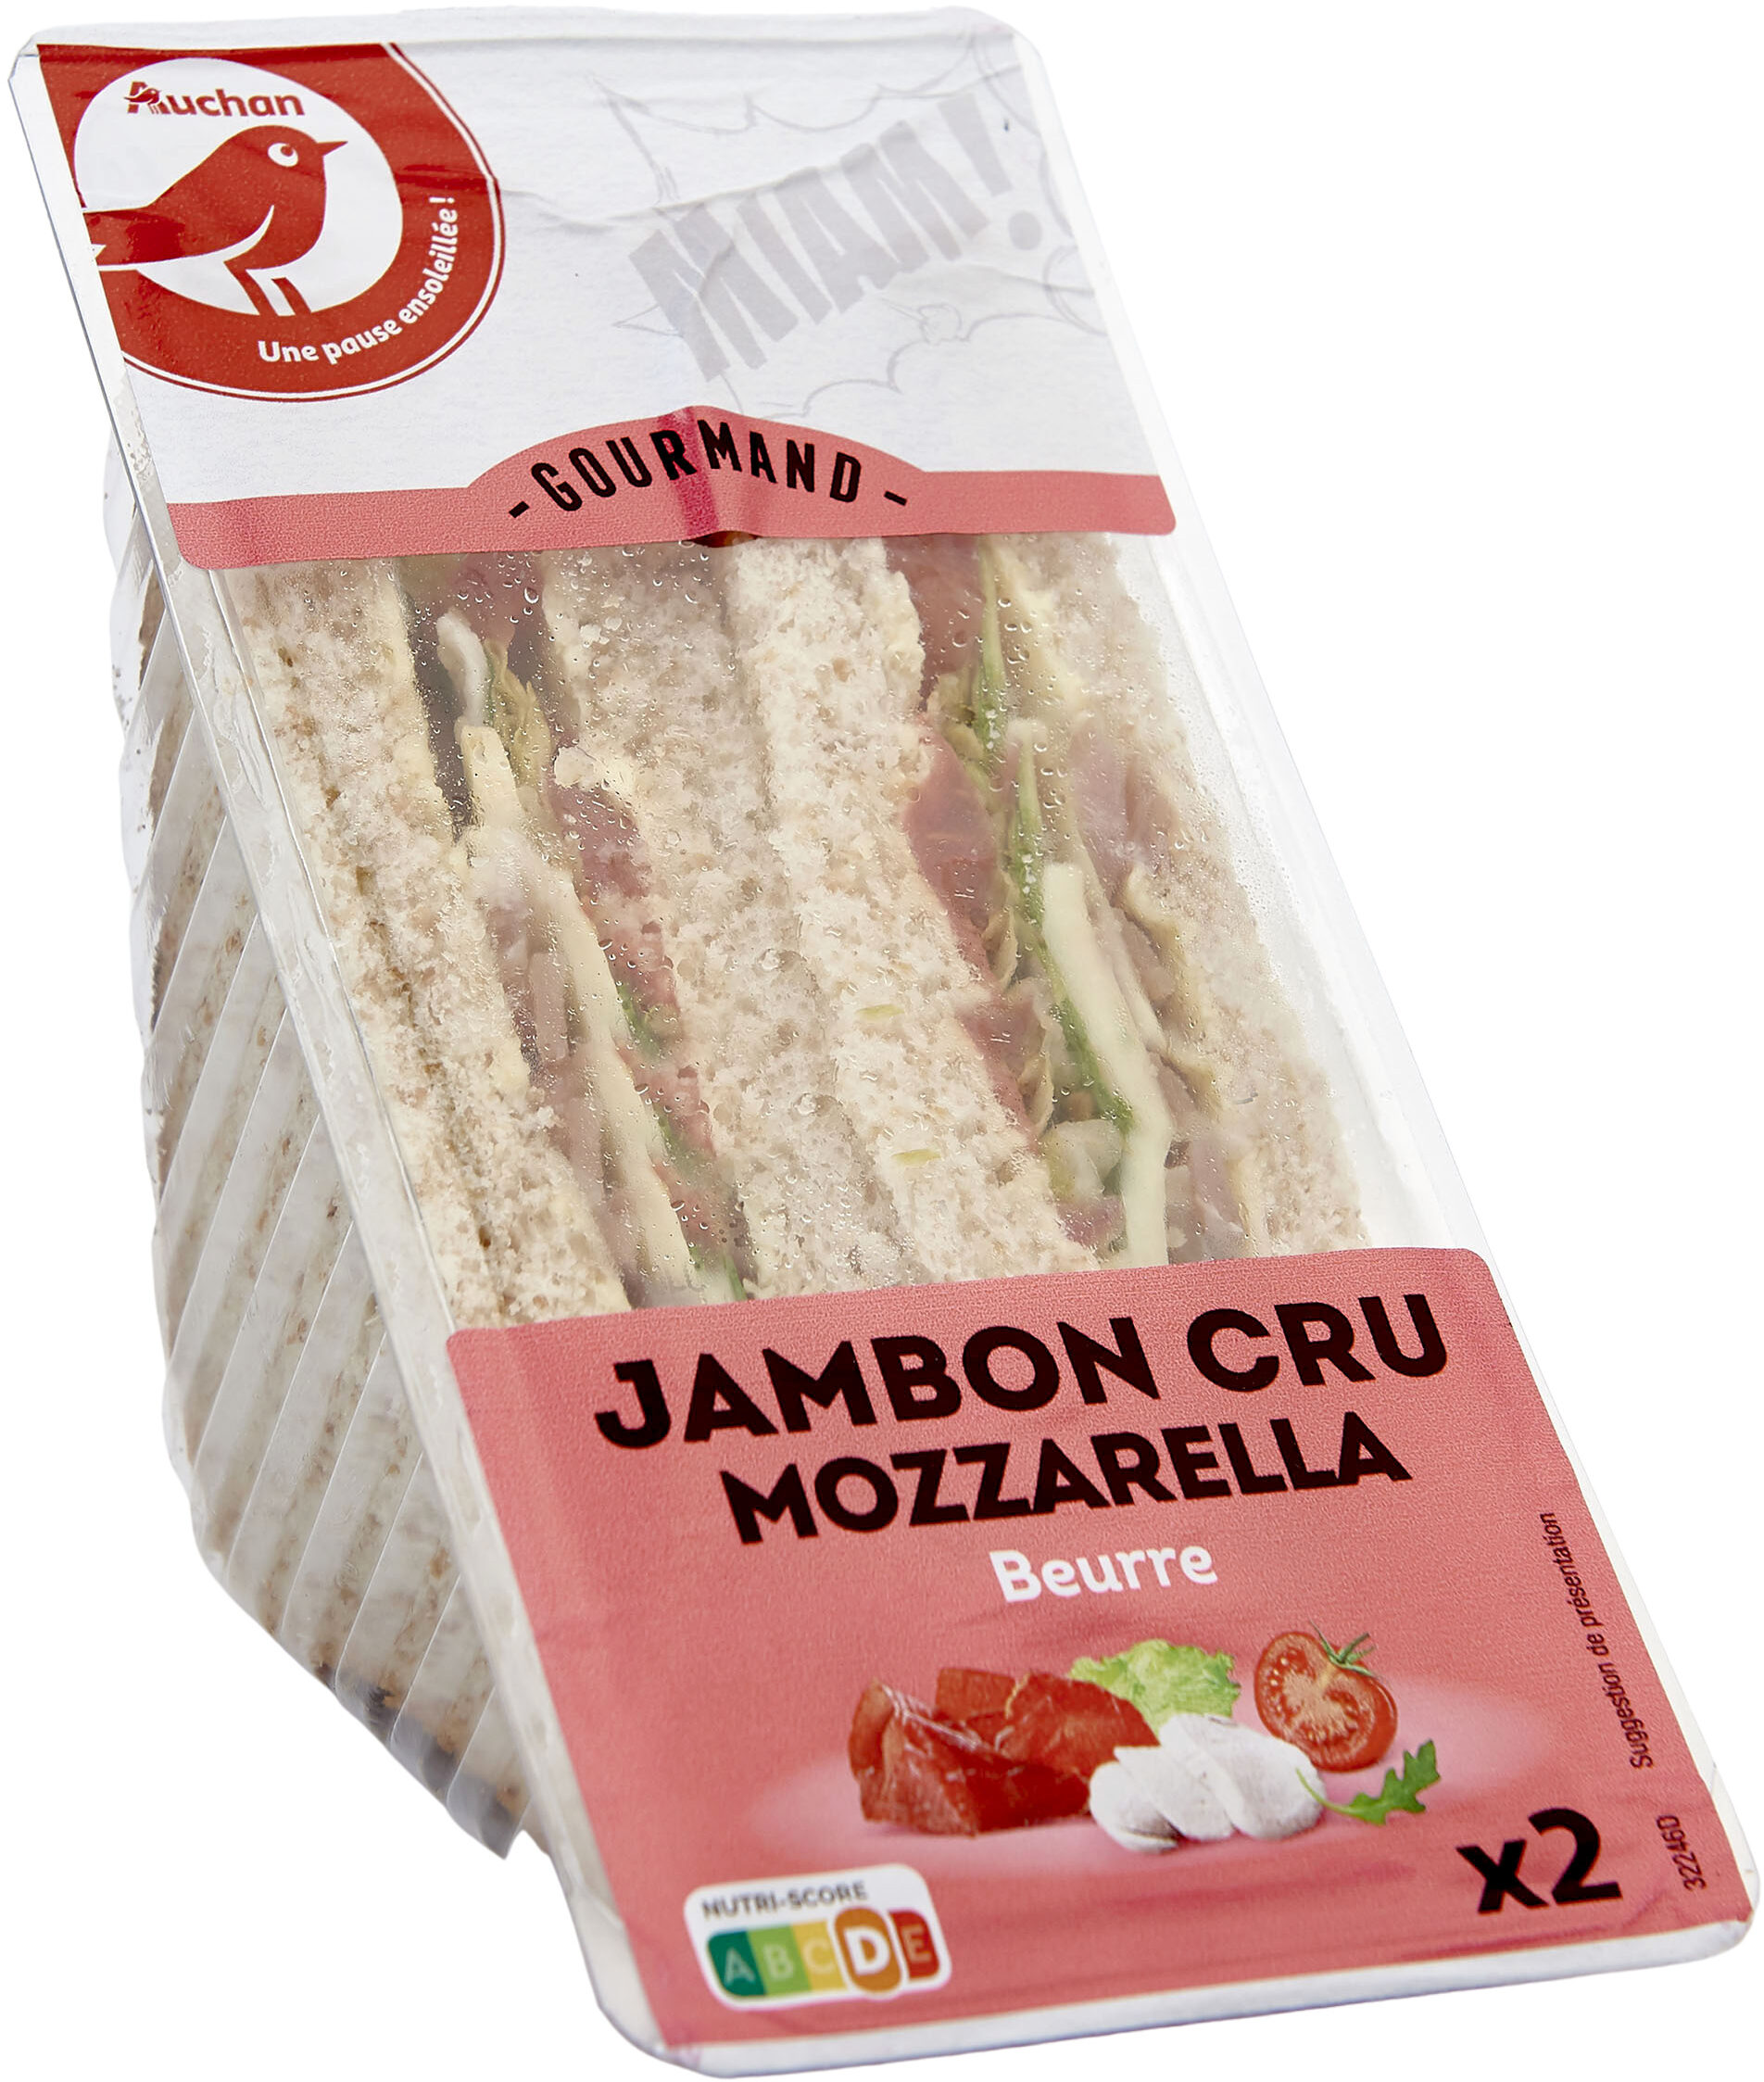 GourmandJambon cru mozzarellaBeurre - Product - fr